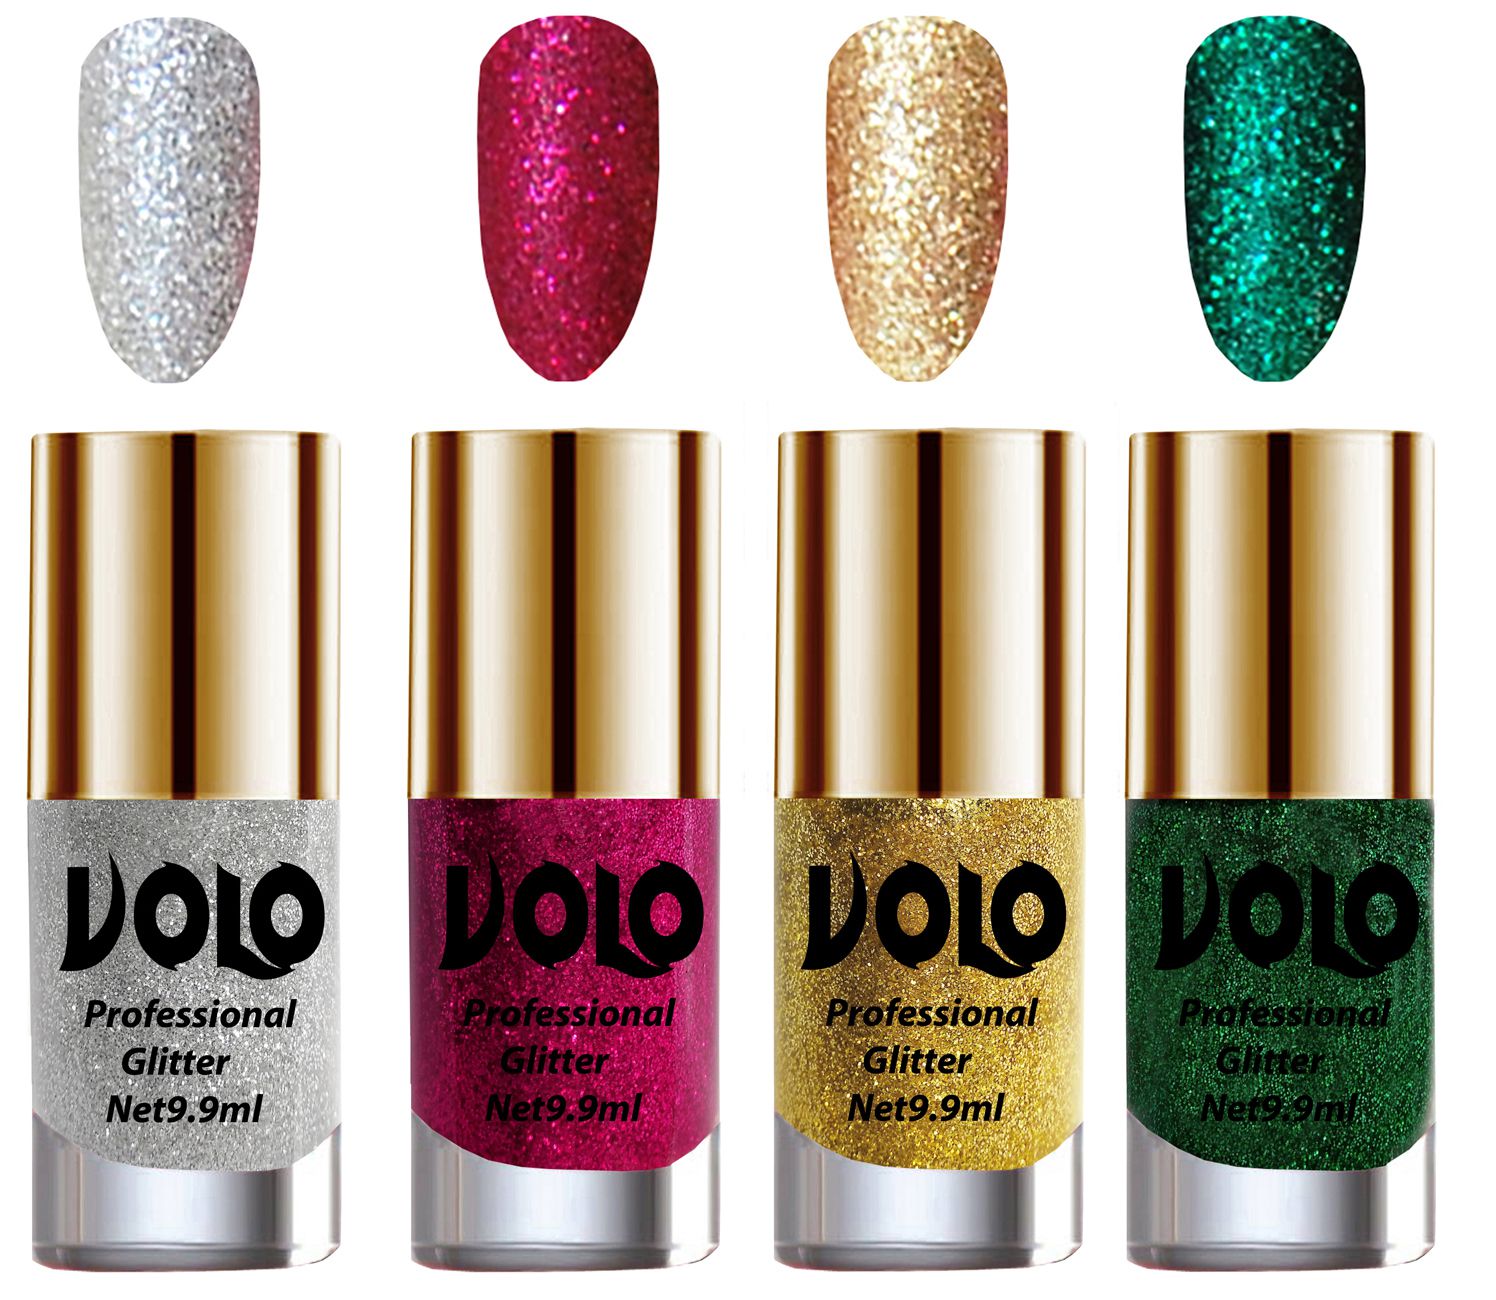     			VOLO Professionally Used Glitter Shine Nail Polish Silver,Magenta,Gold Green Pack of 4 39 mL